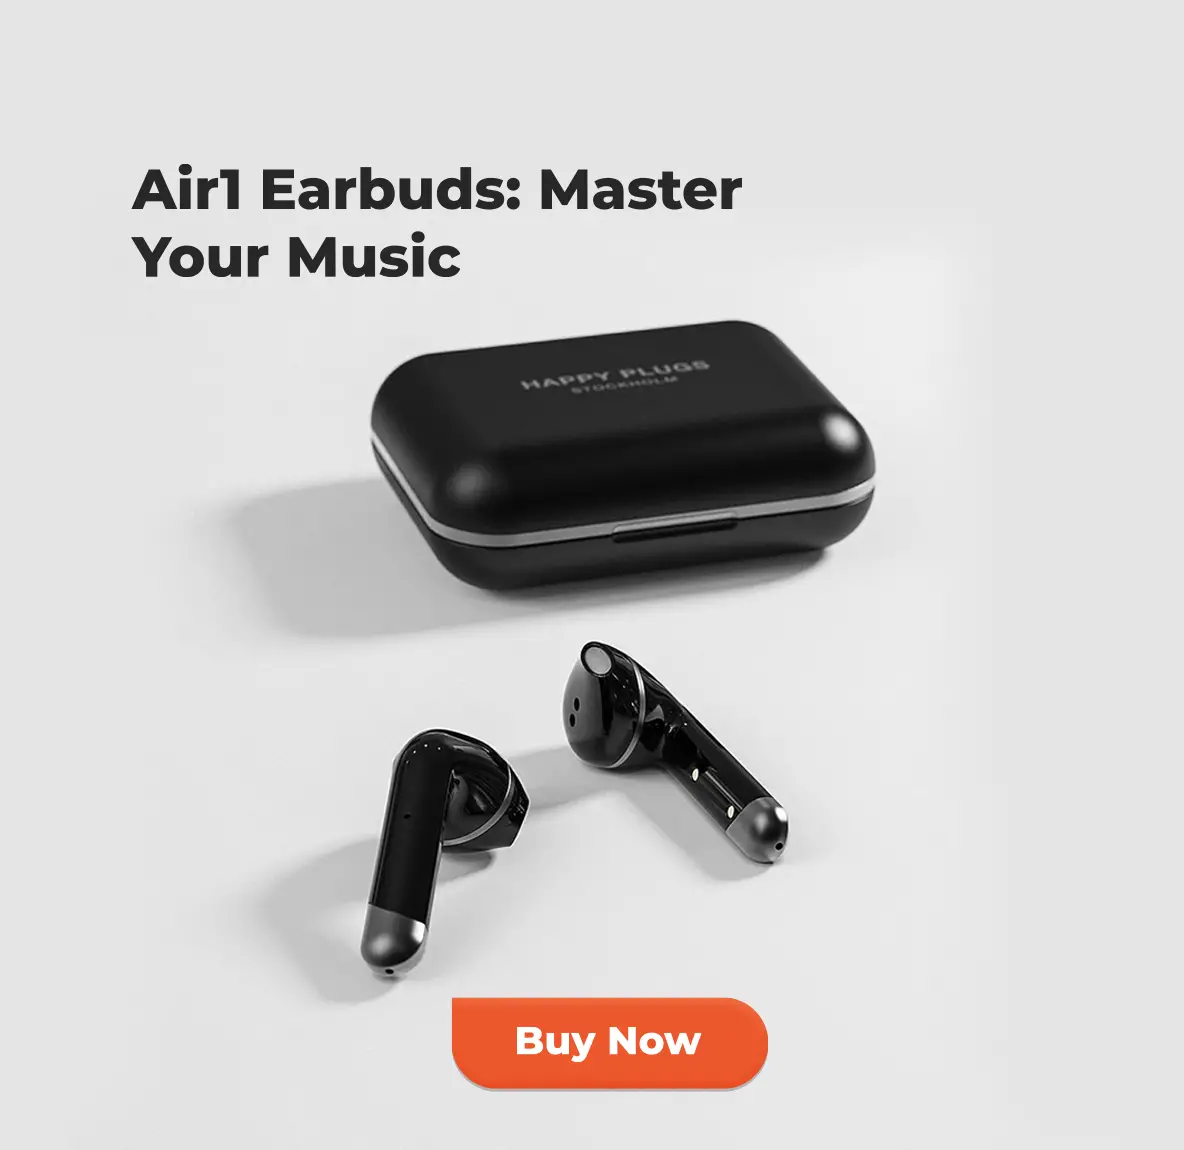 air1 earbuds image